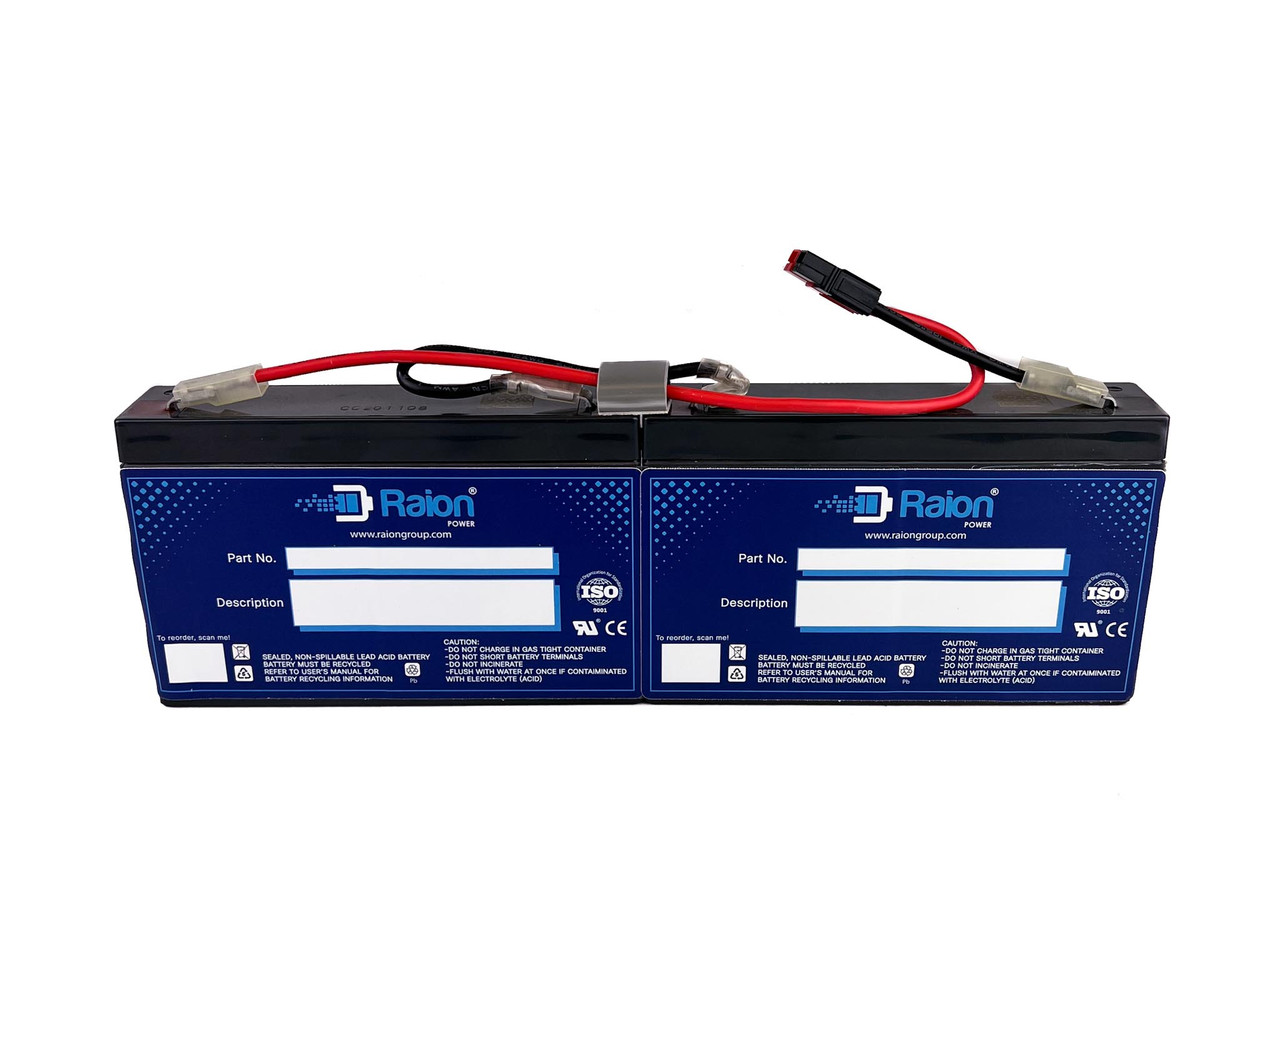 Raion Power Lead Acid Replacement Battery Cartridge for APC Smart-UPS SC 250VA Rackmount/Tower 230V 1U SC250RMI1U